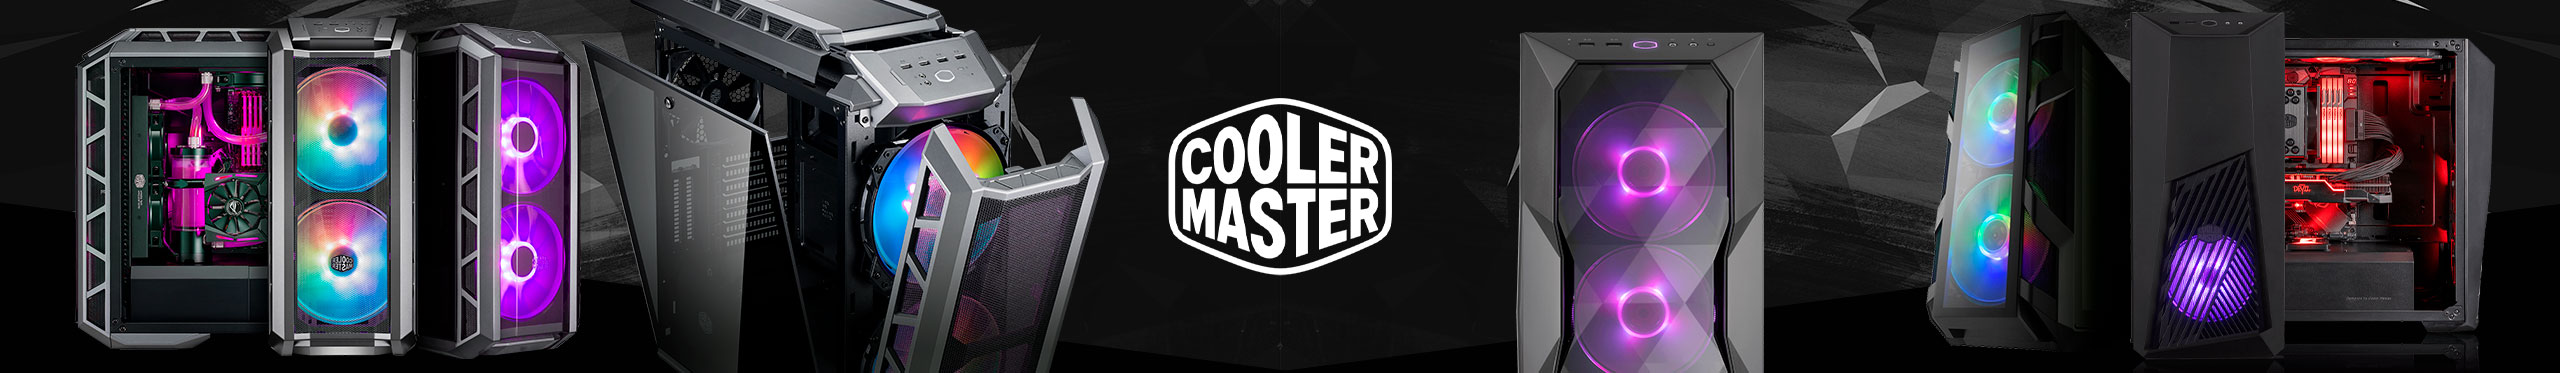 Gabinetes Cooler Master. Mais qualidade e mais durabilidade.